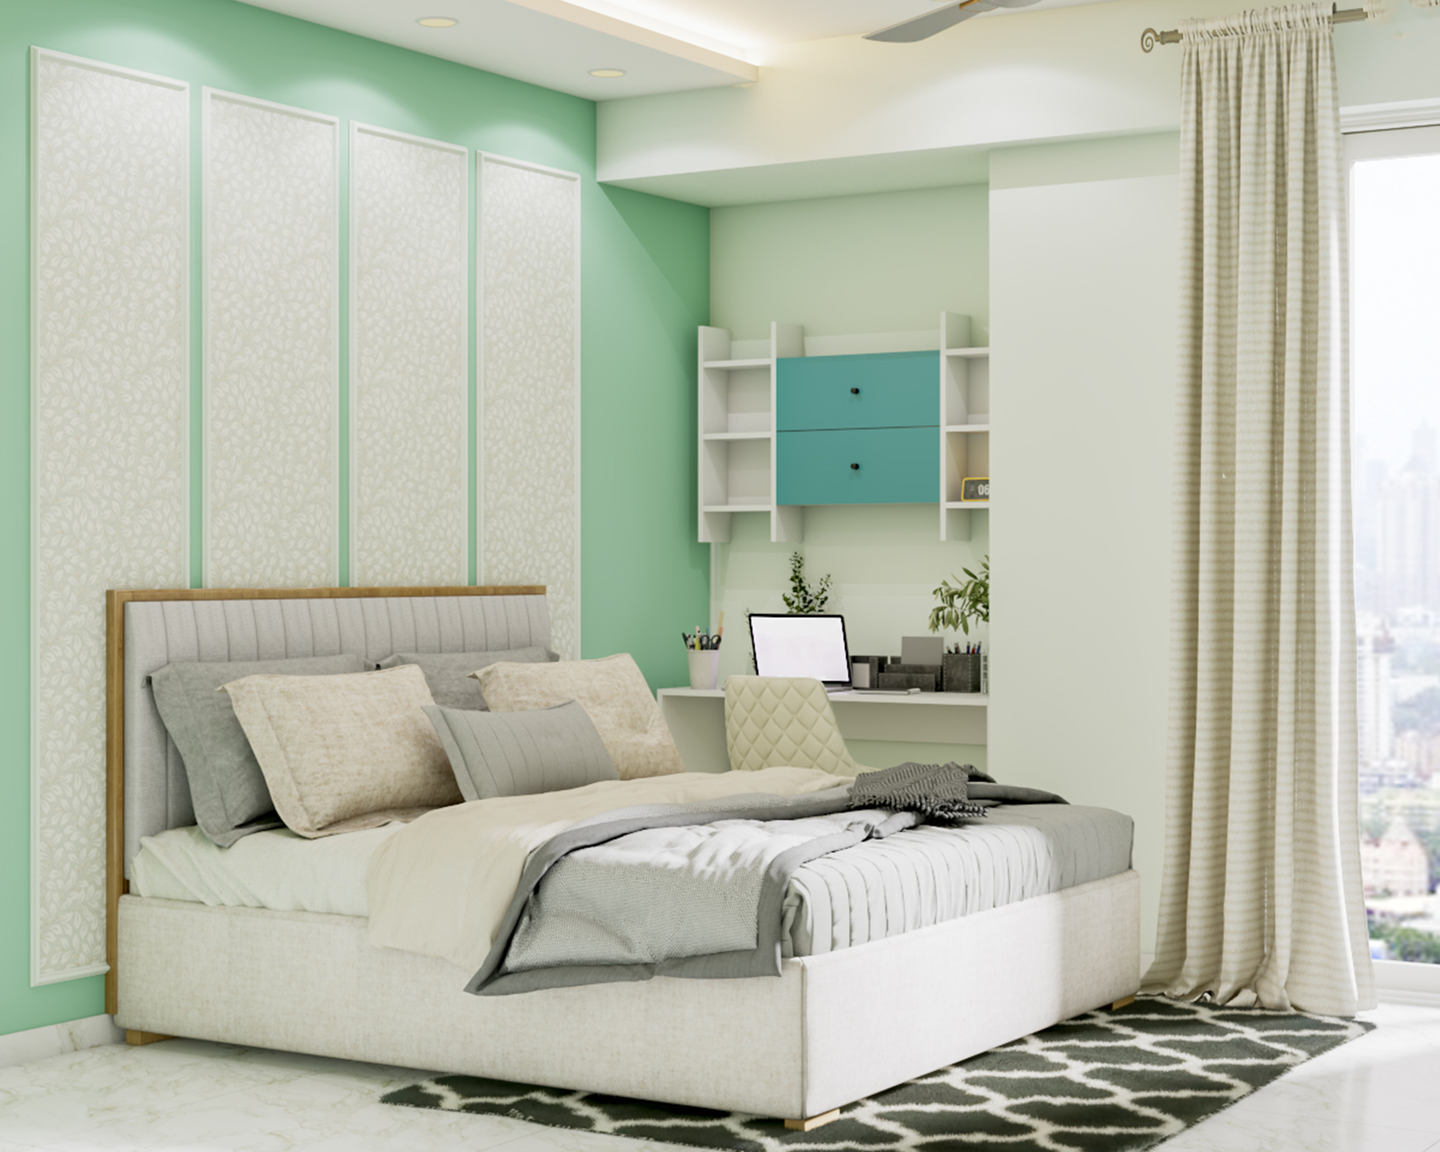 Multifunctional Modern Guest Bedroom Design - Livspace